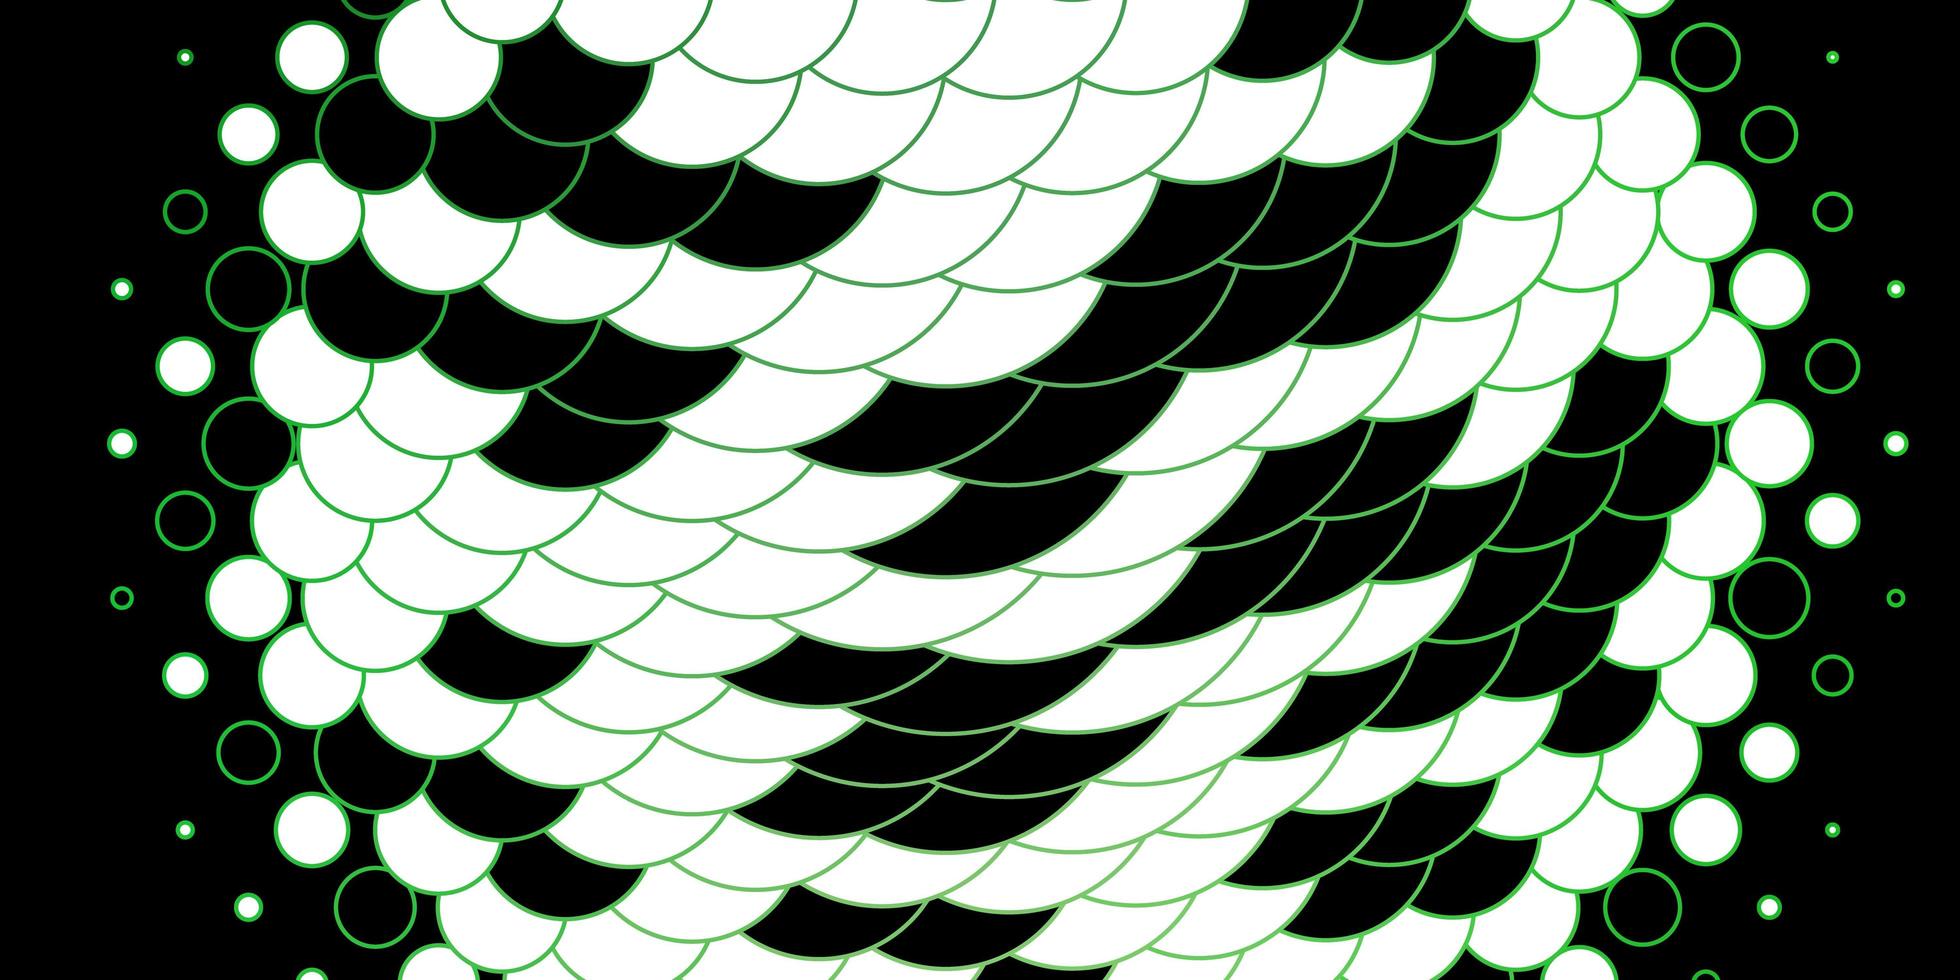 Telón de fondo de vector verde oscuro con círculos. Ilustración abstracta de brillo con gotas de colores. diseño de carteles, pancartas.